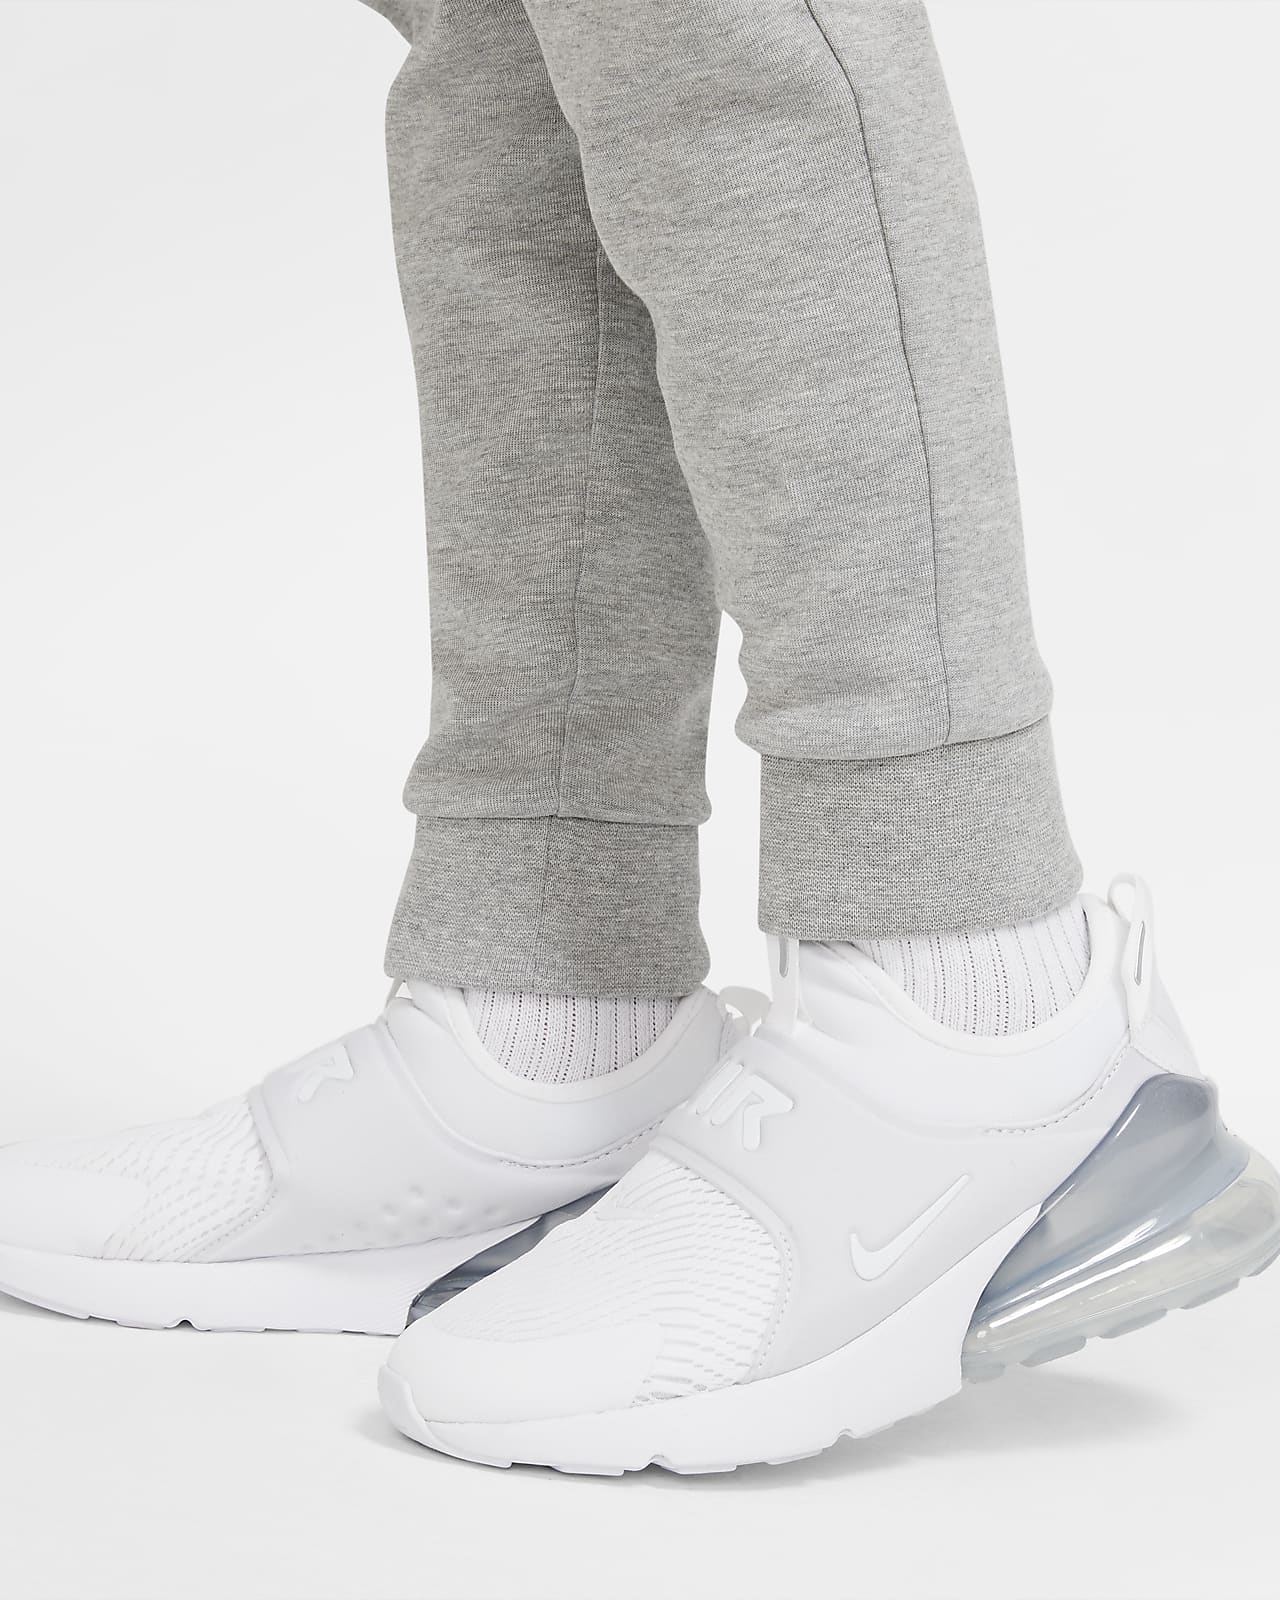 Nike Older Boys Tech Fleece Pants - Grey